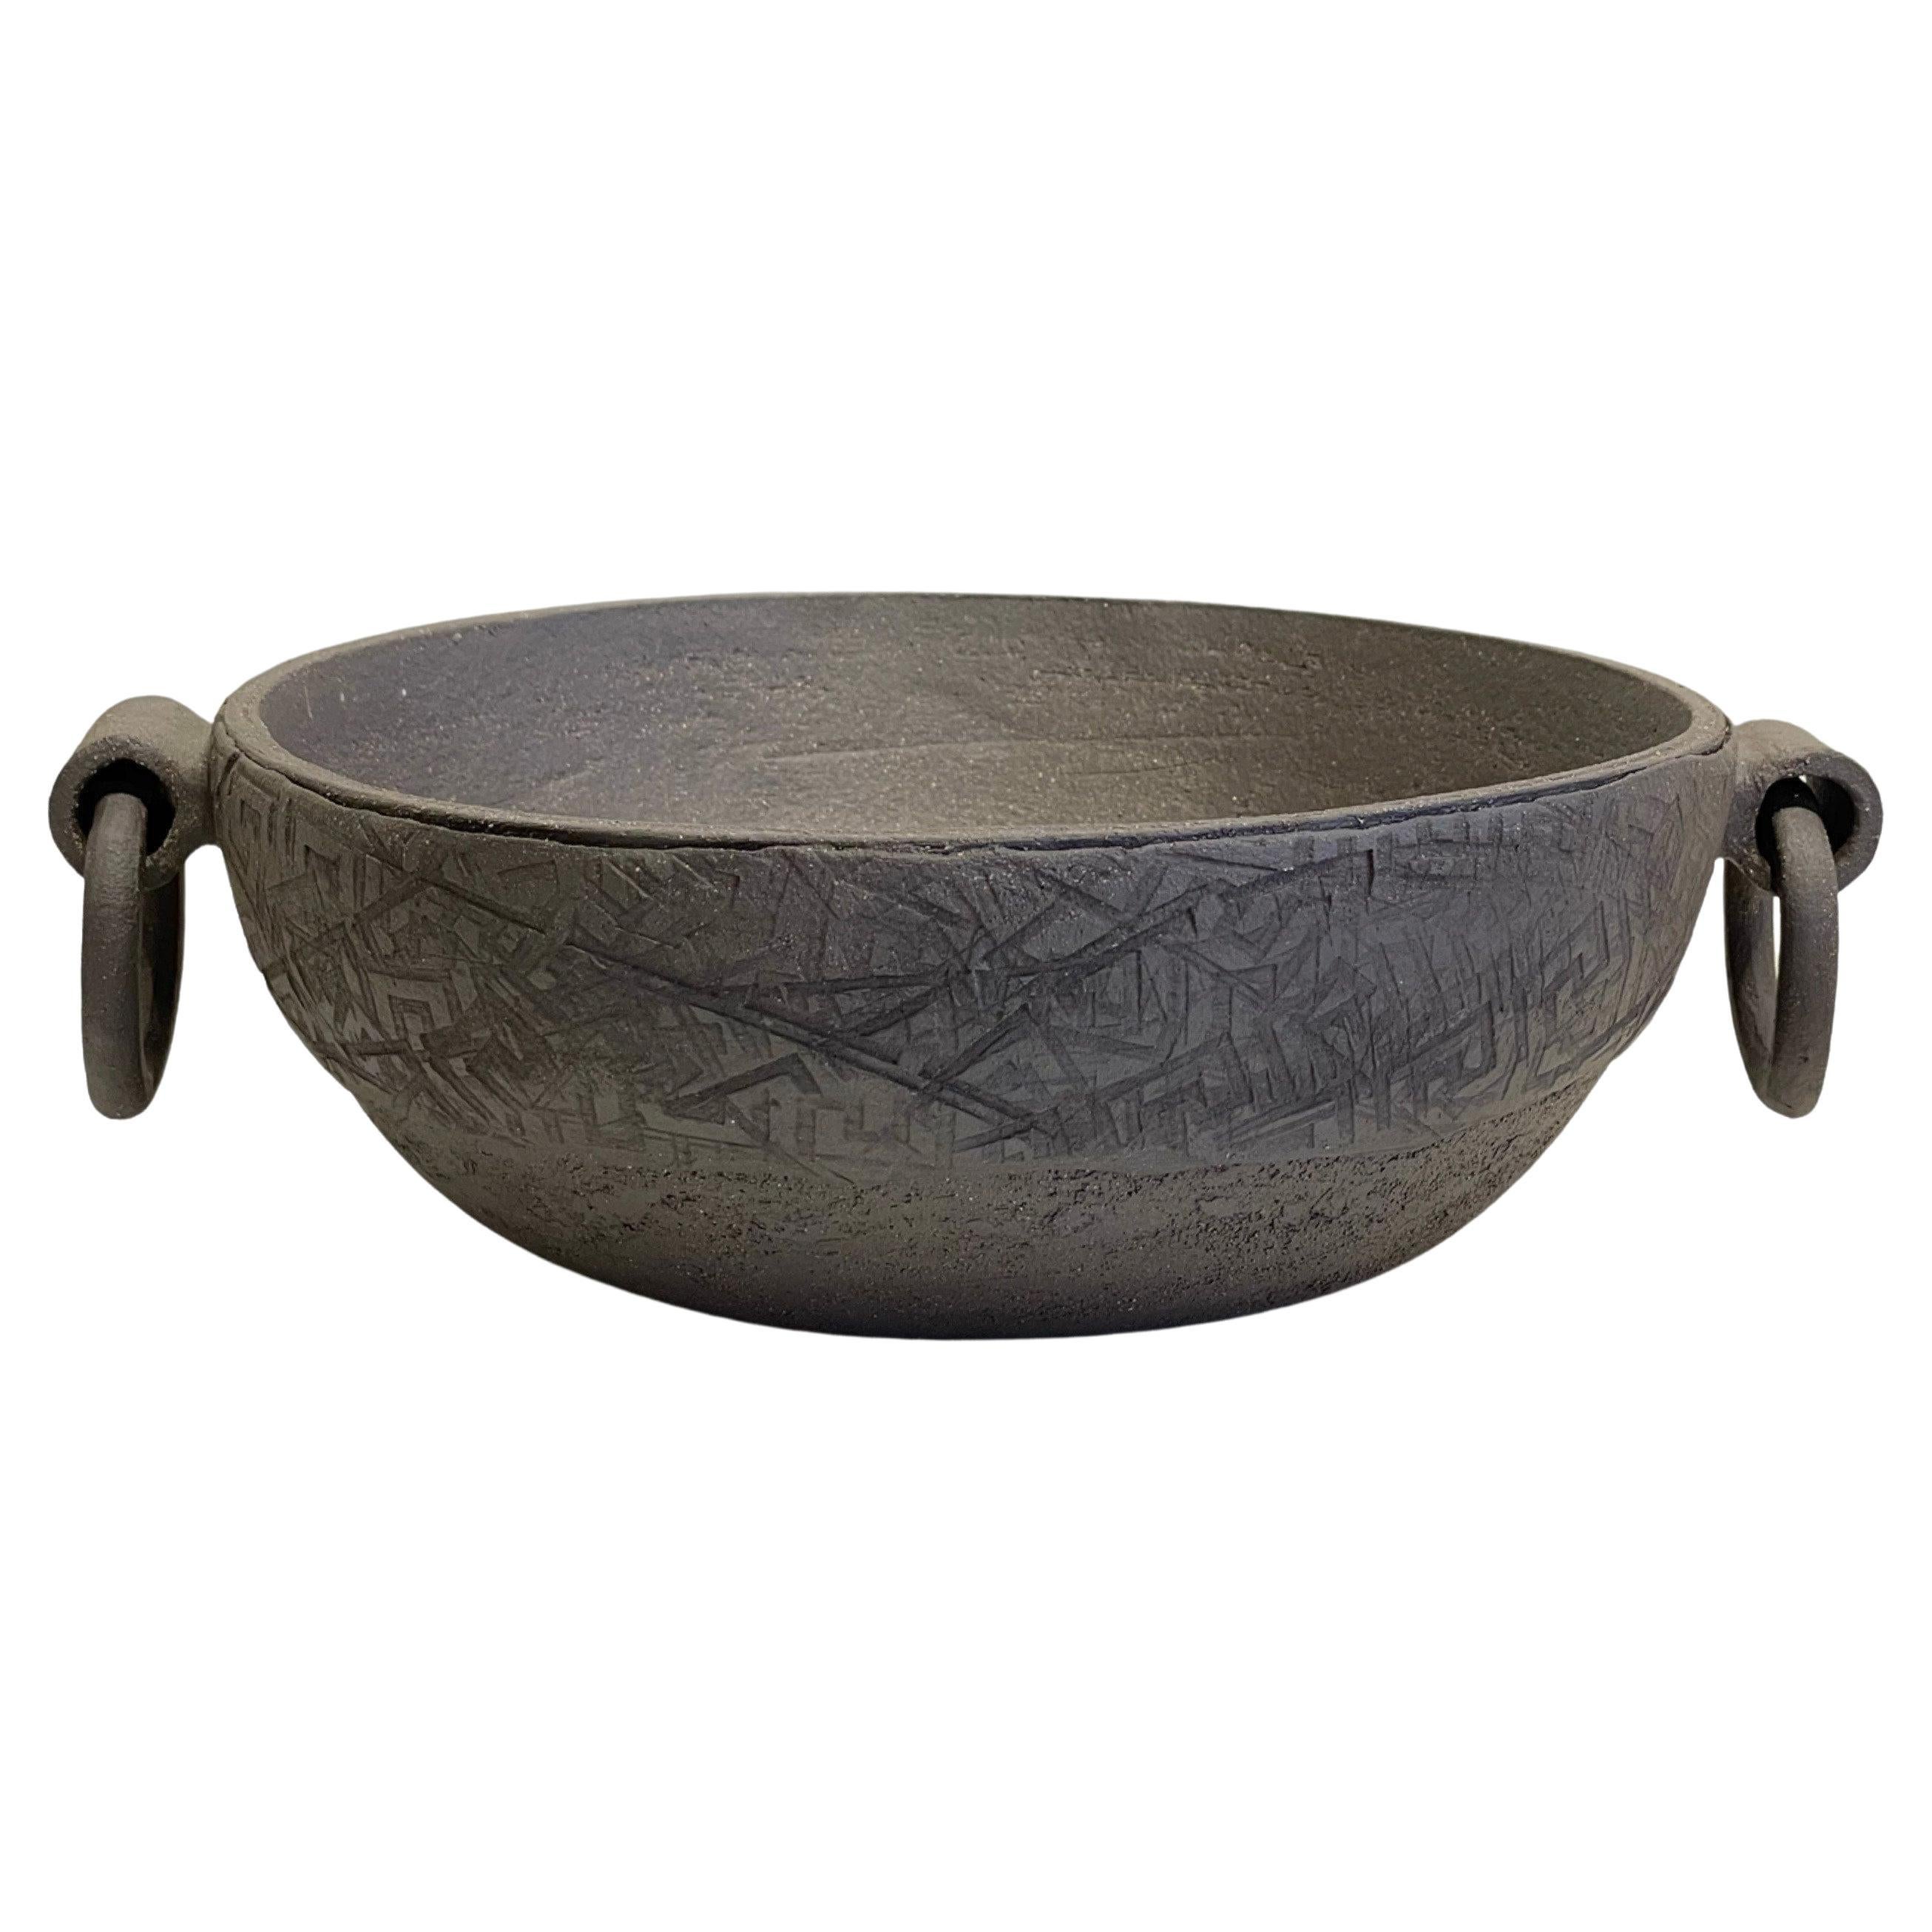 Artisanal Ceramic Centerpiece, Handcrafted Decorative Bowl, Dark Brown For Sale